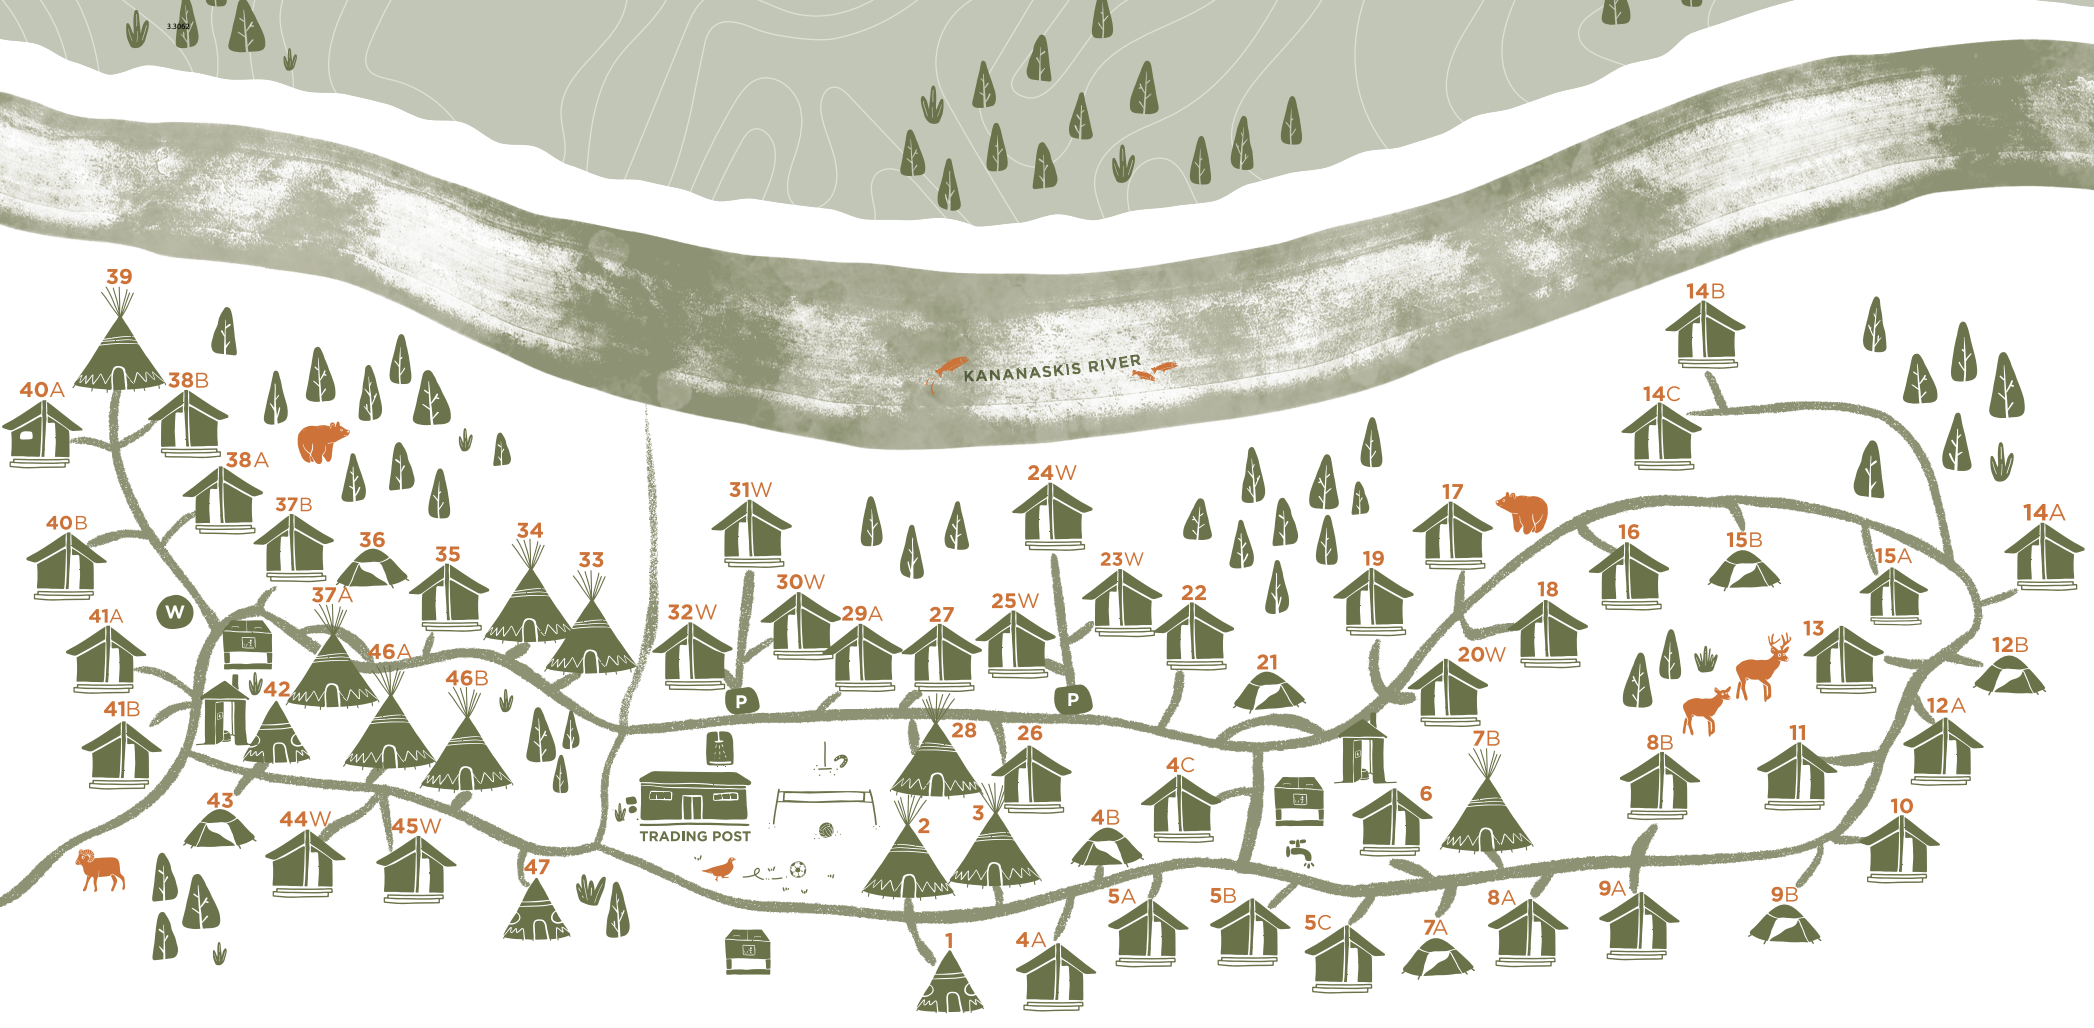 image credit to Sundance by Basecamp. Image shows the animated map of Sundance Lodges